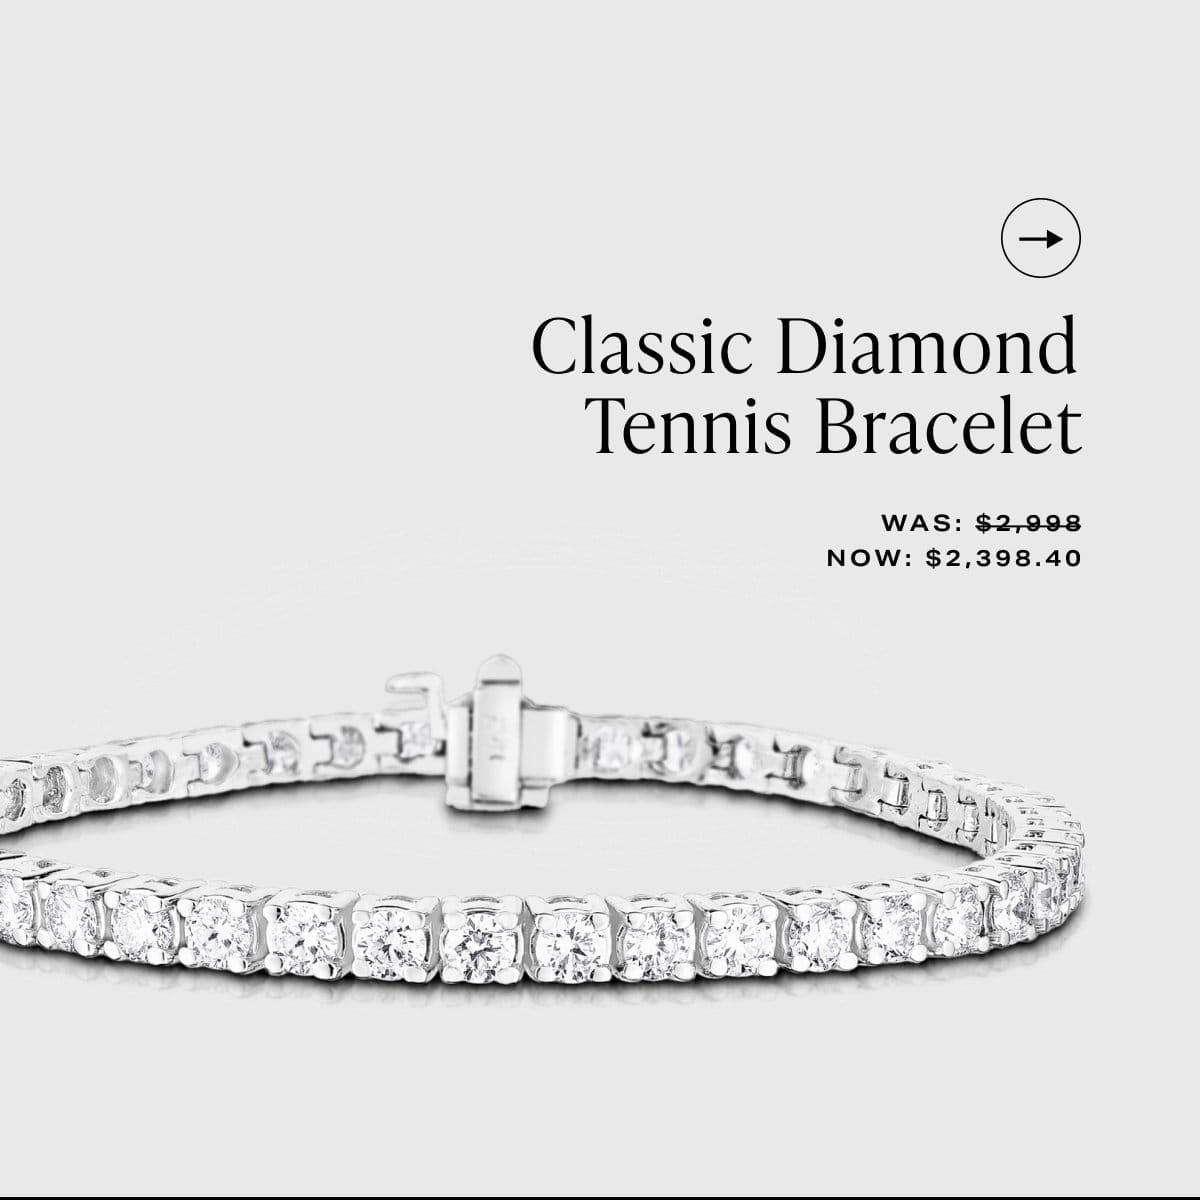 Classic Diamond Tennis Bracelet